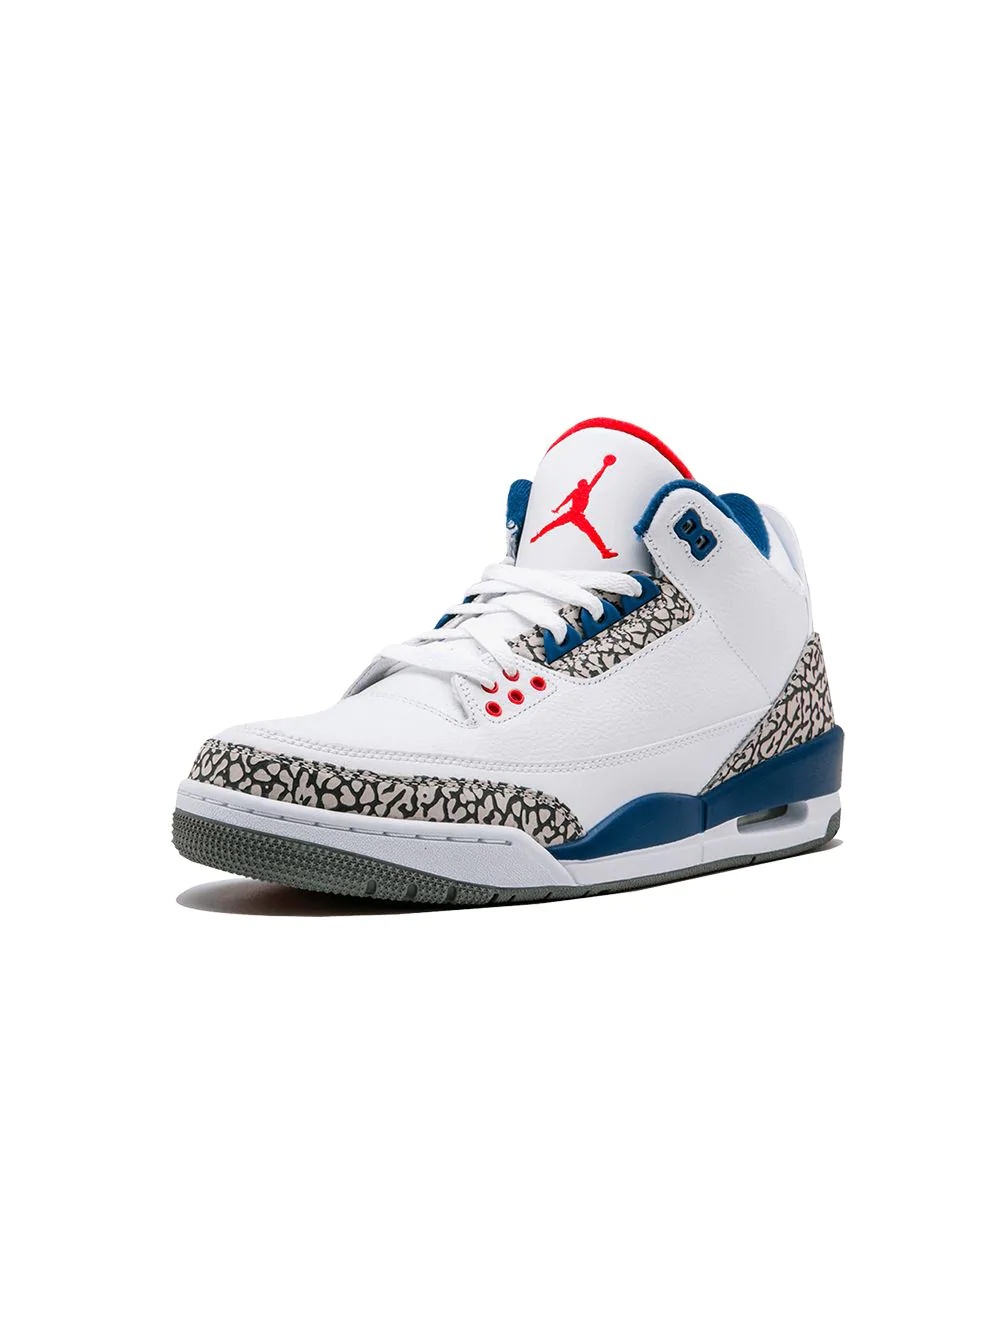 Air Jordan 3 Retro OG "True Blue" sneakers - 4